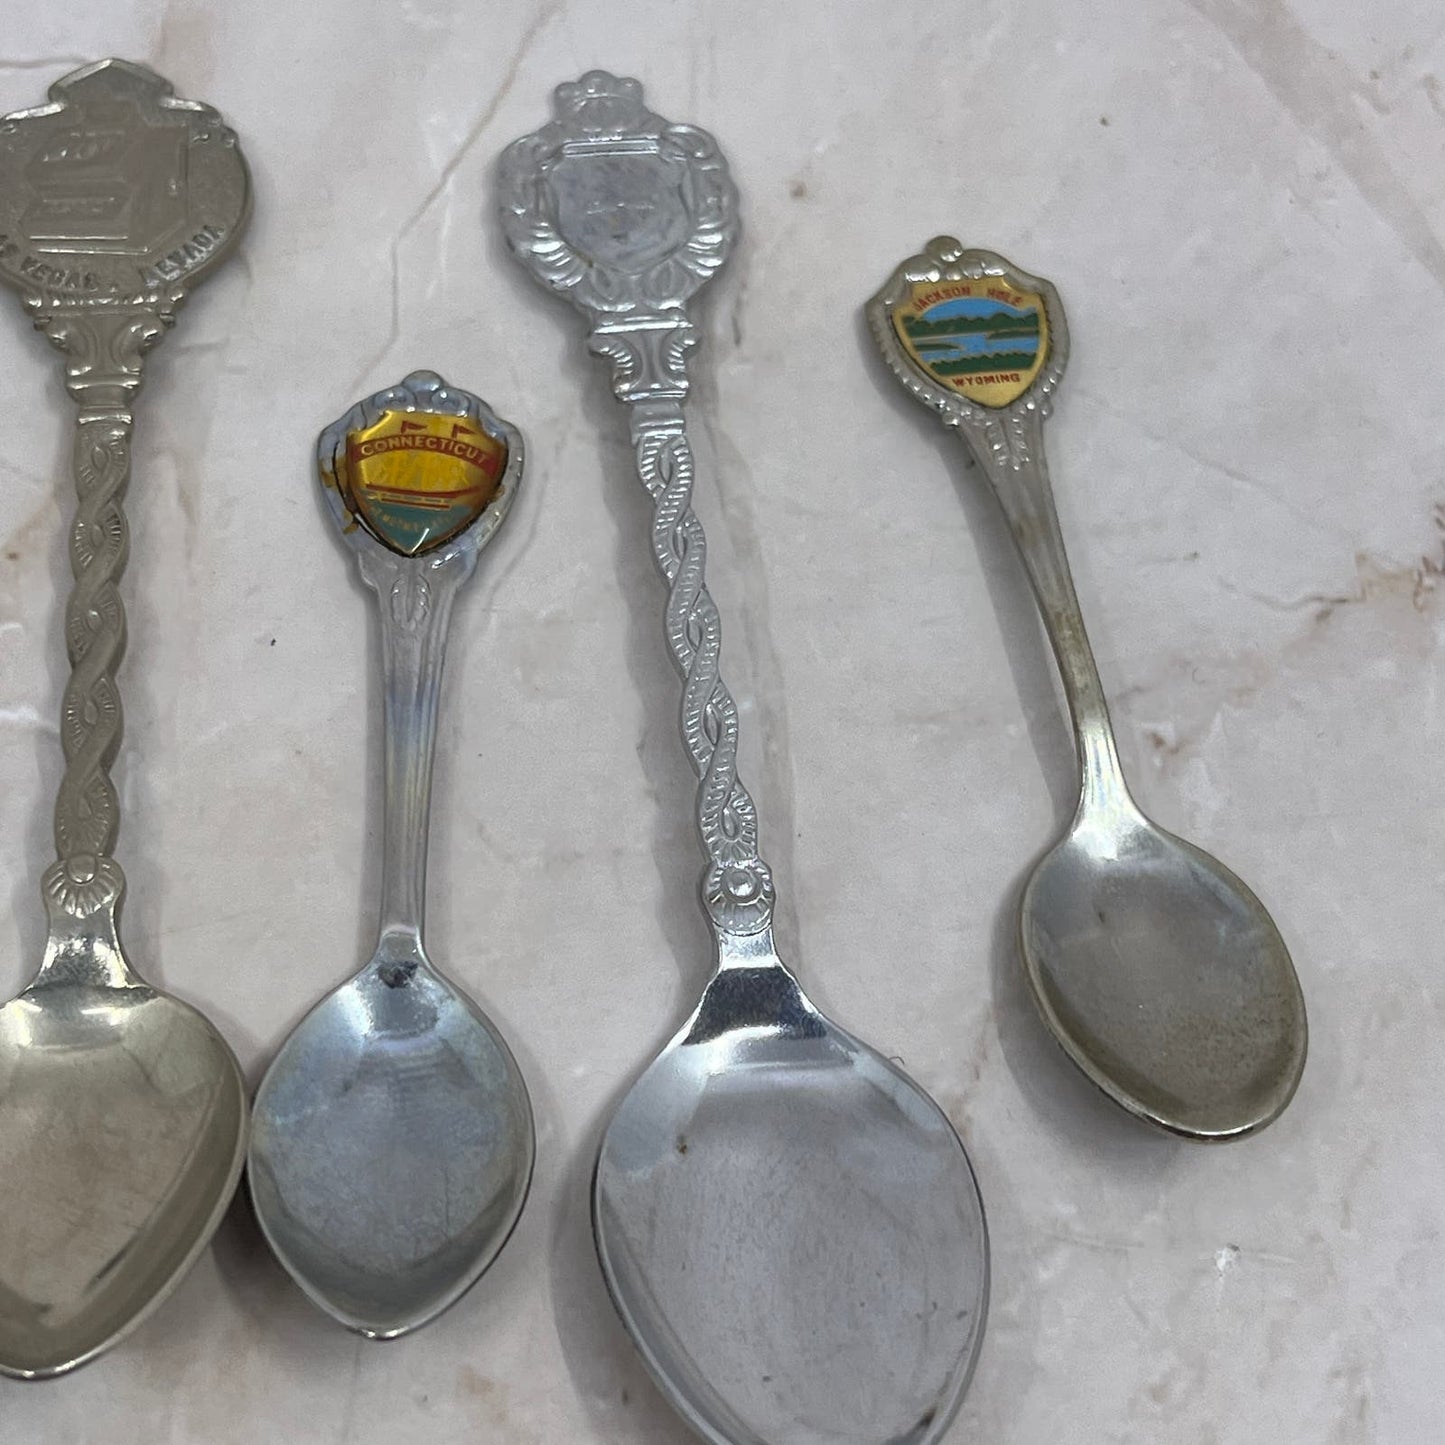 Vintage Mini Souvenir Spoon Lot of 11 Spoons TG9